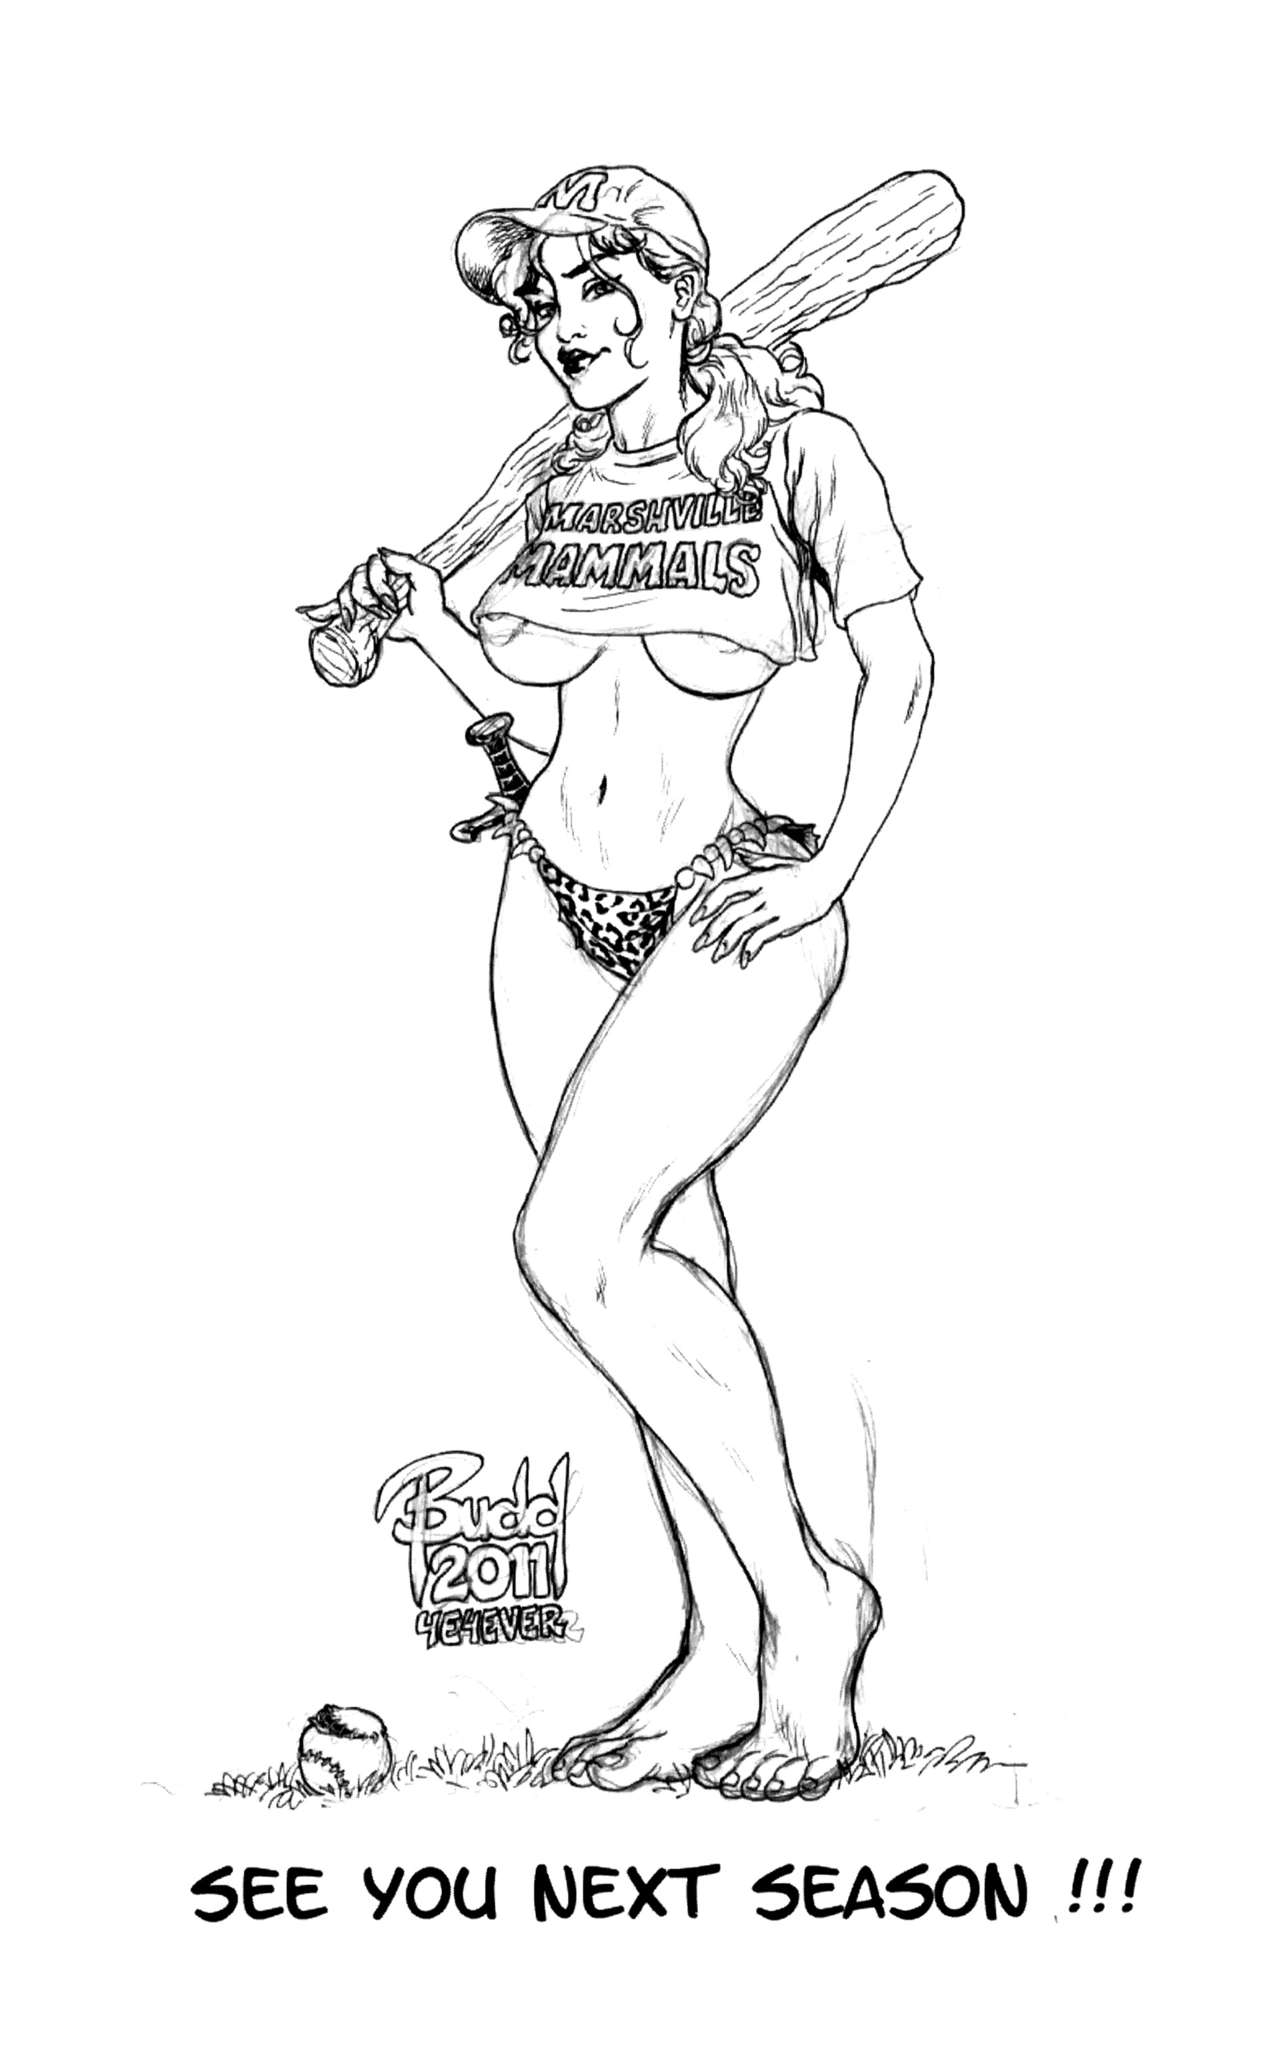 [Budd Root] Cavewoman, PU's from Budd, HeroesCon 2011 Sketchbook 25